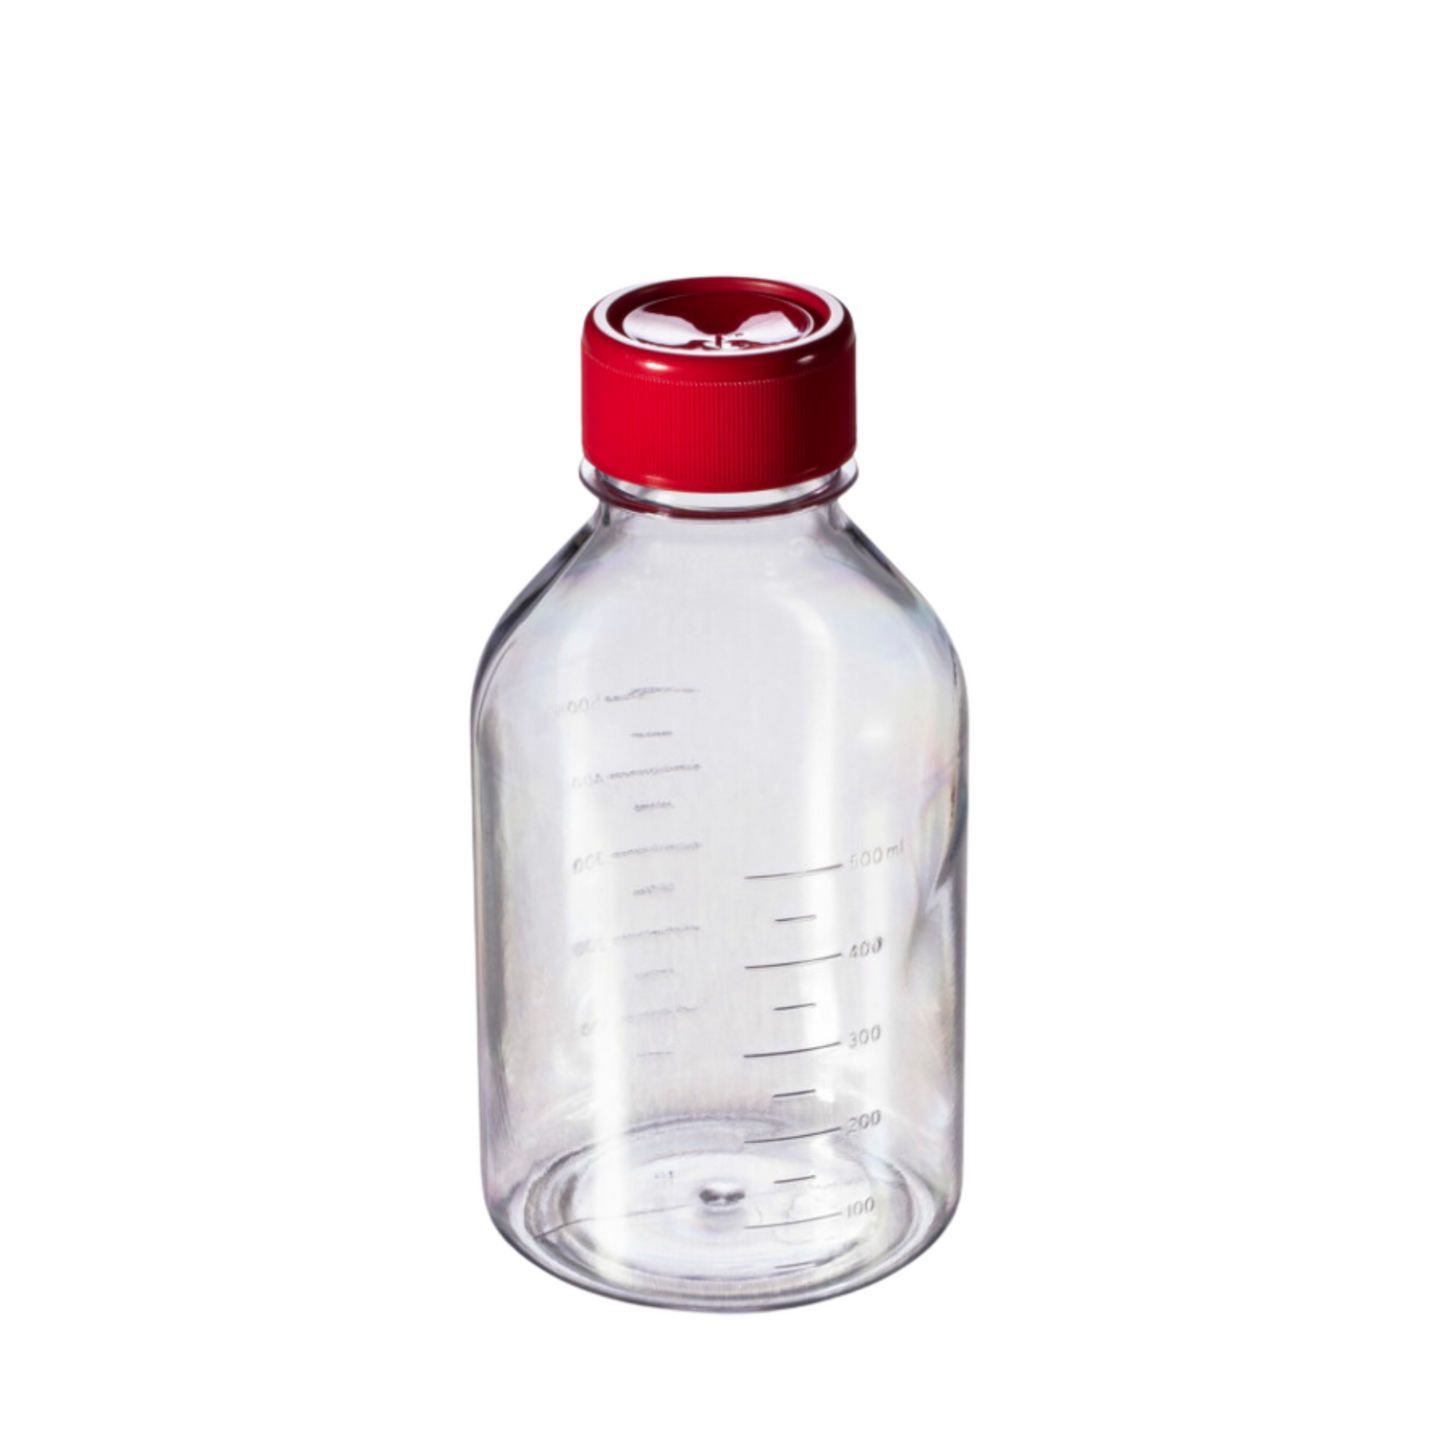 Corning Costar Disposable Storage Bottles 125ml, 250ml, 500ml, 1L, Traditional Style, Polystyrene